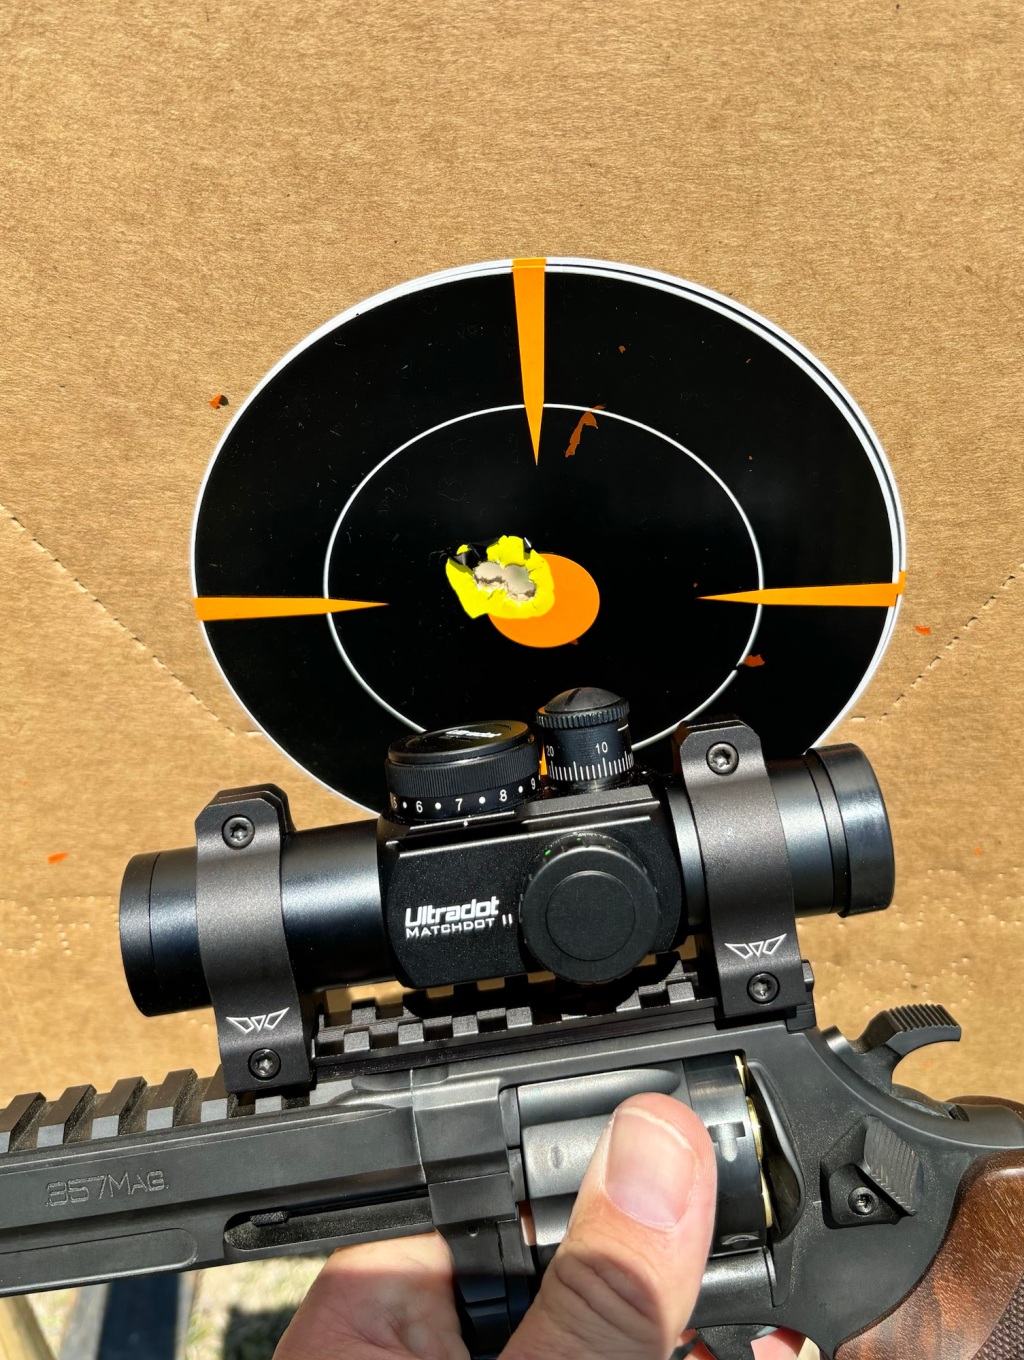 Ultradot Prototype Field Shooting Video.